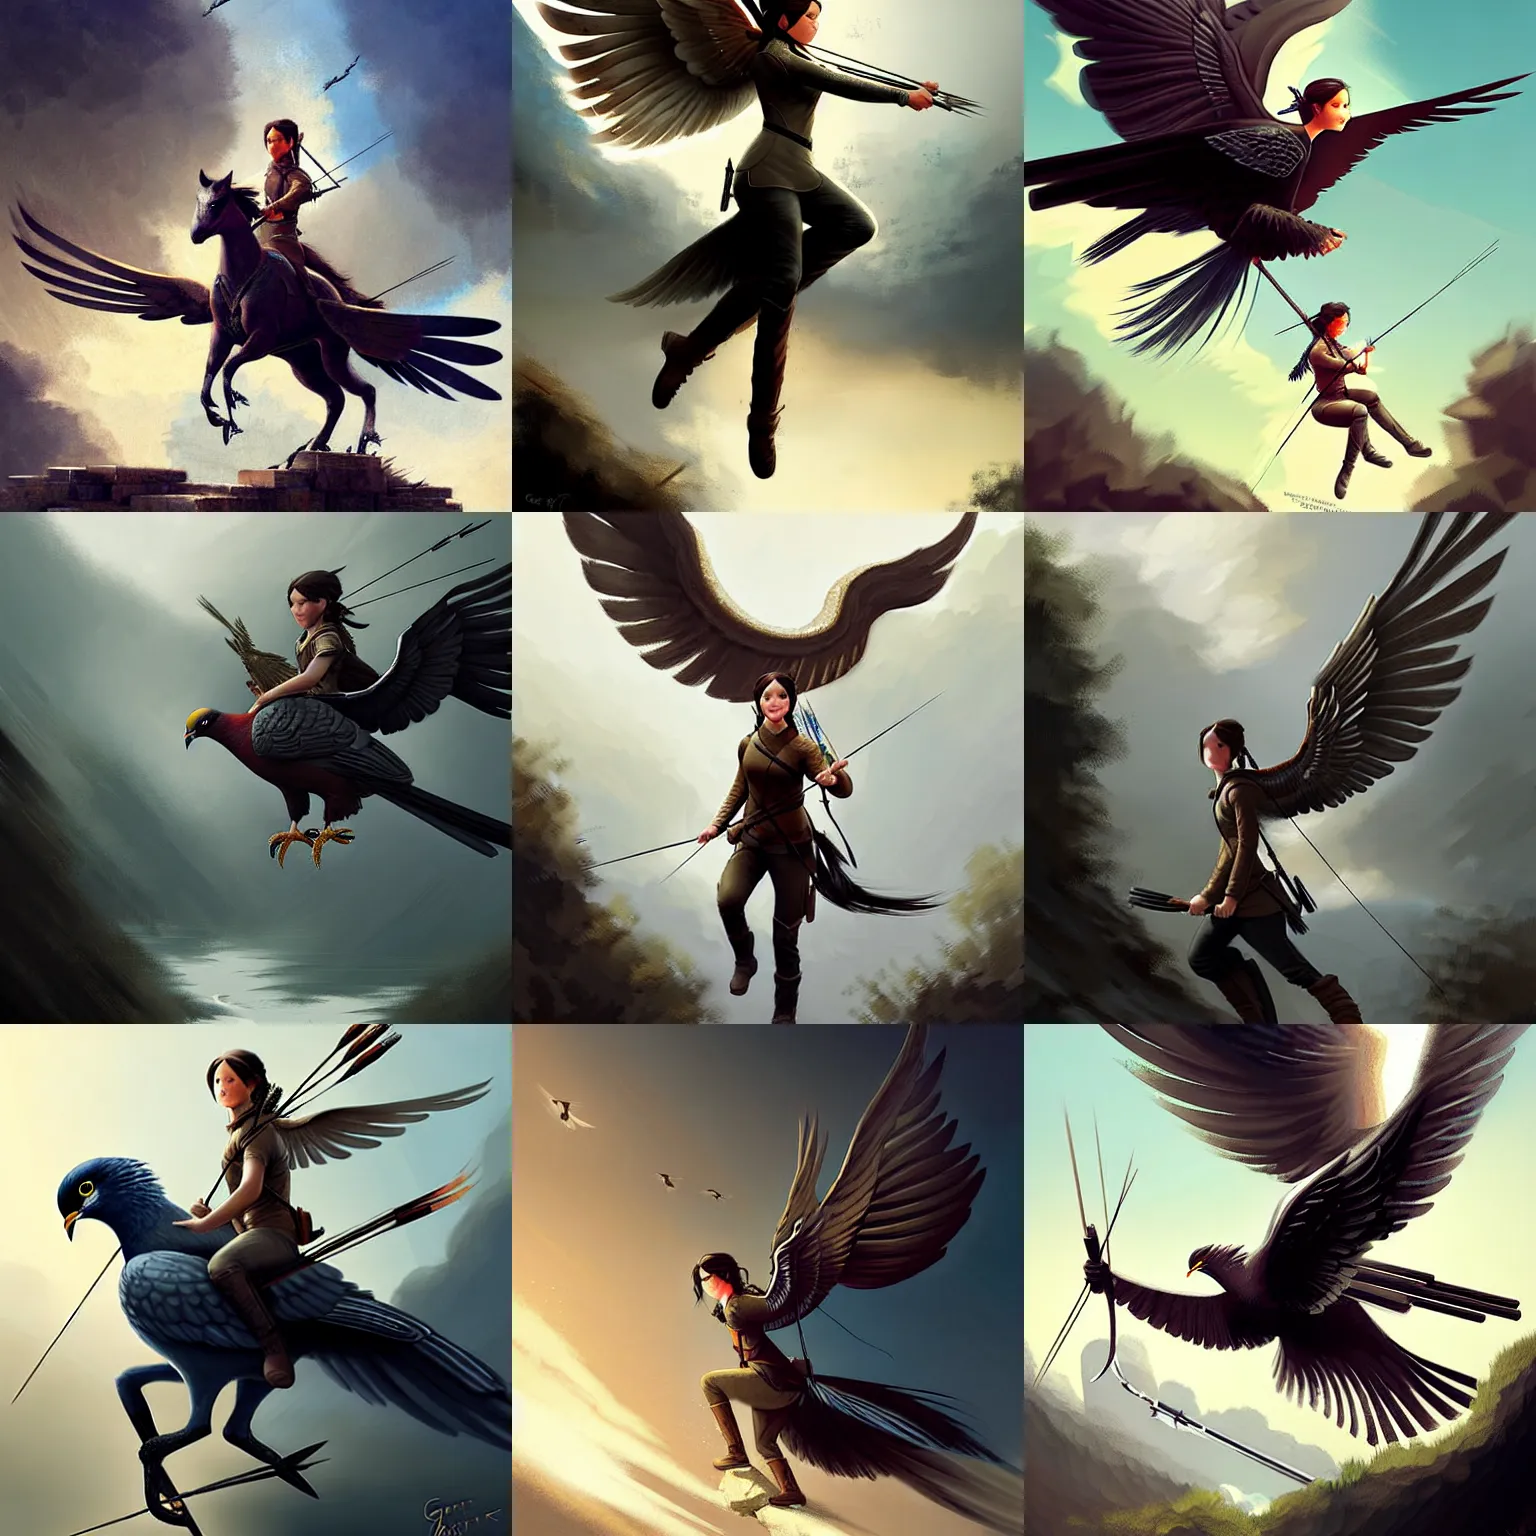 Prompt: katniss everdeen riding on a giant pigeon, digital fantasy art by greg rutkowski